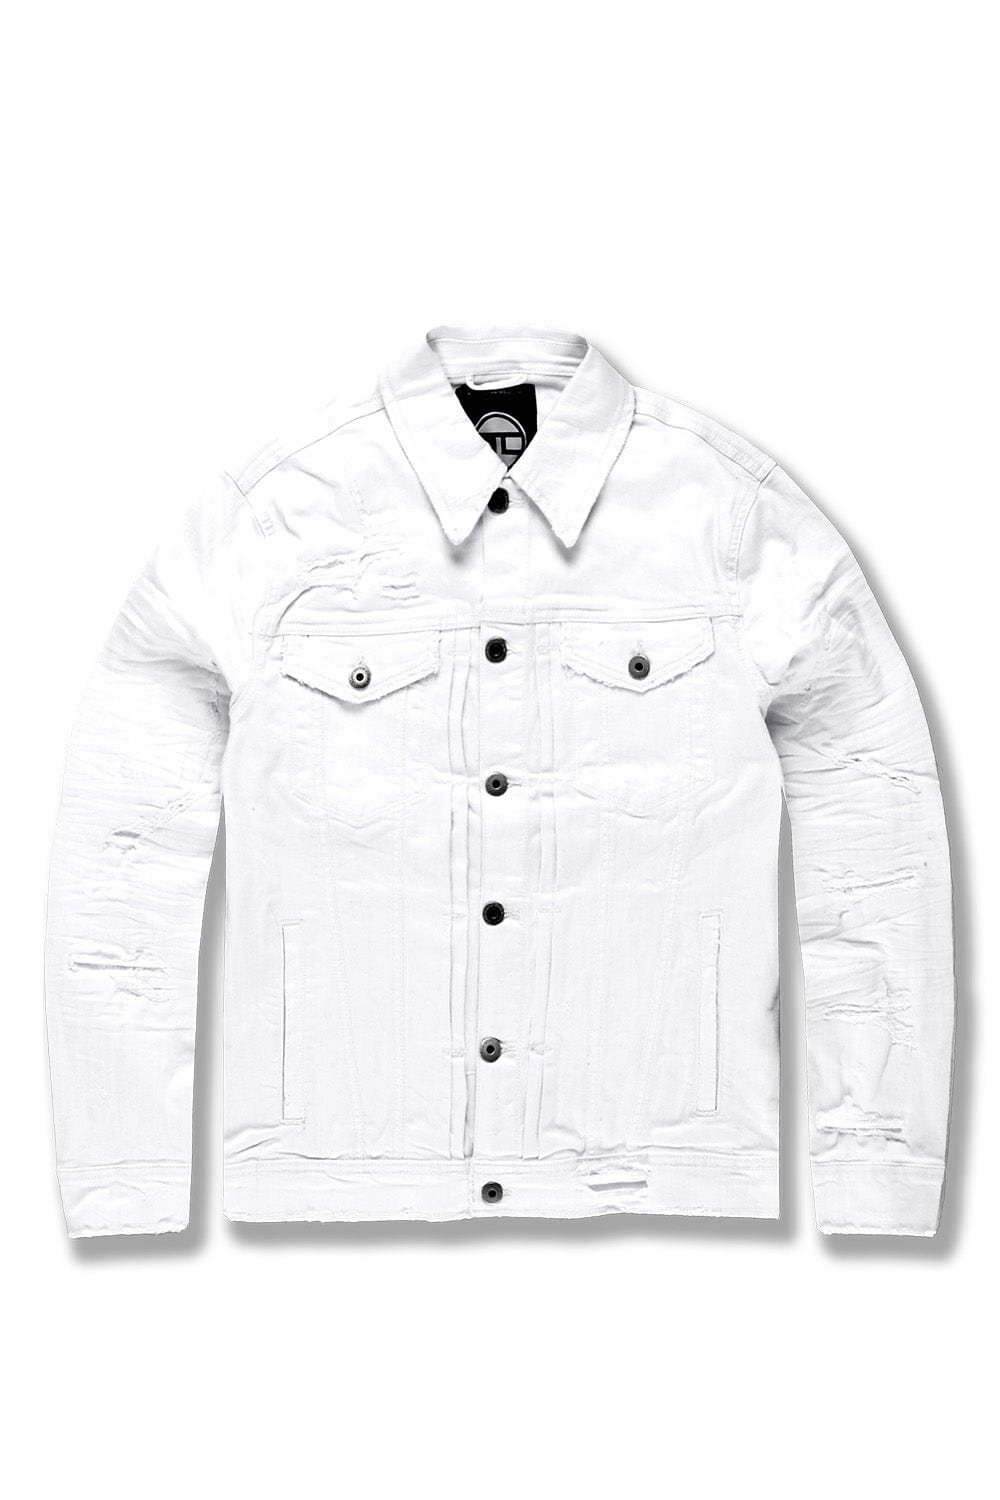 Jordan Craig Tribeca Twill Trucker Jacket (Core Colors) White / S